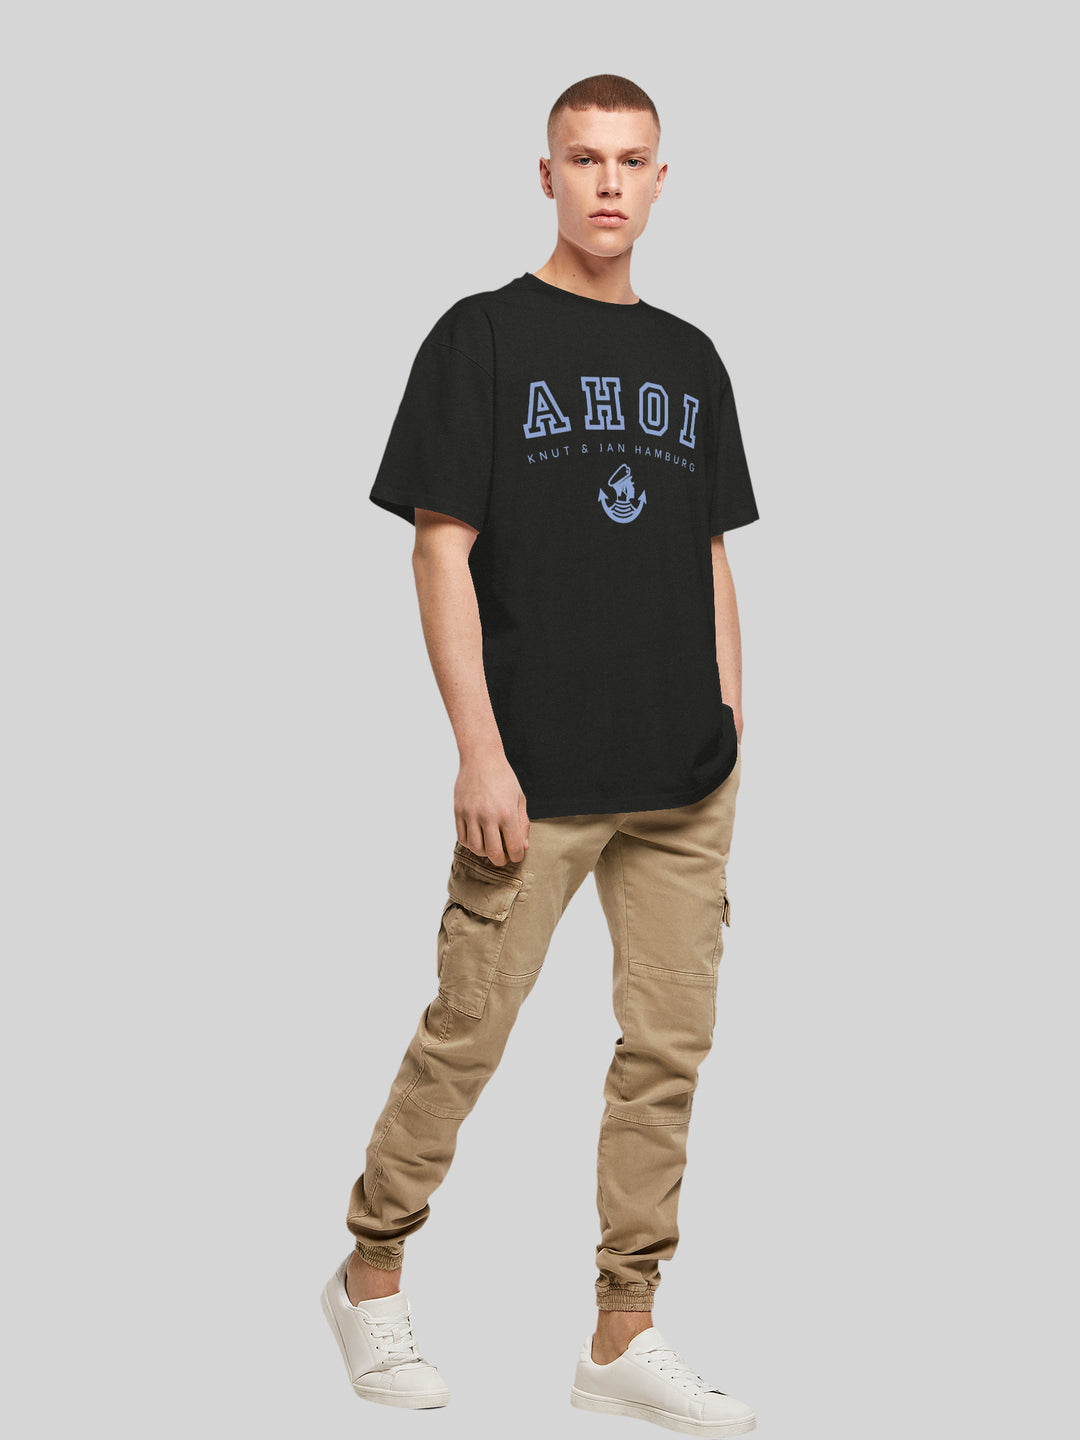 KNUT | Oversize T-Shirt Herren Ahoi